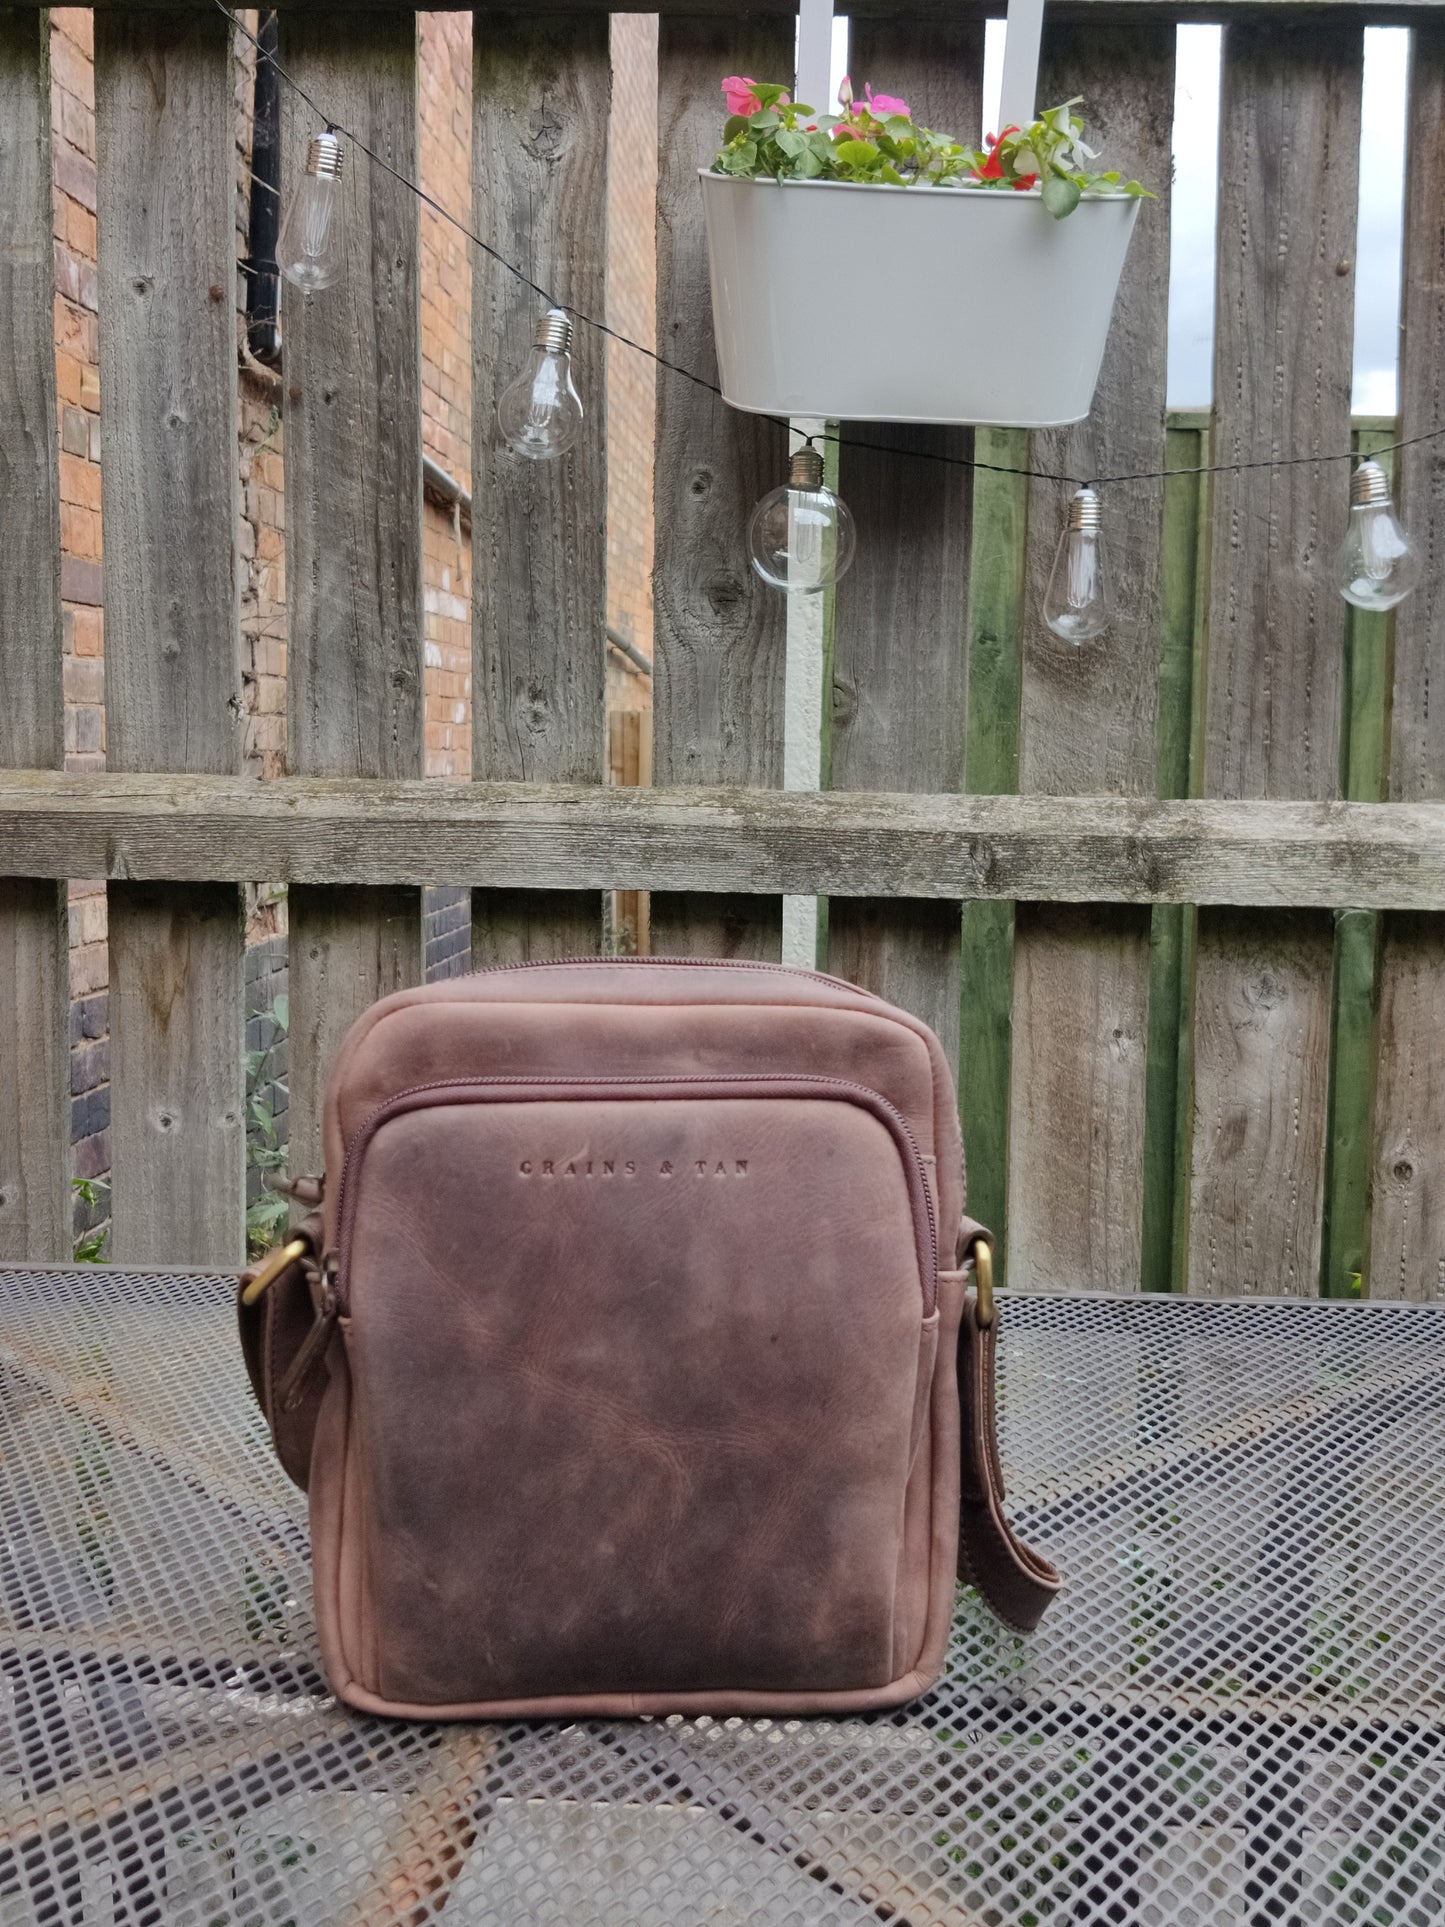 GT-H71: Genuine Leather Men's Messenger Bag, Crossbody Messenger (RFID Protected) by G&T